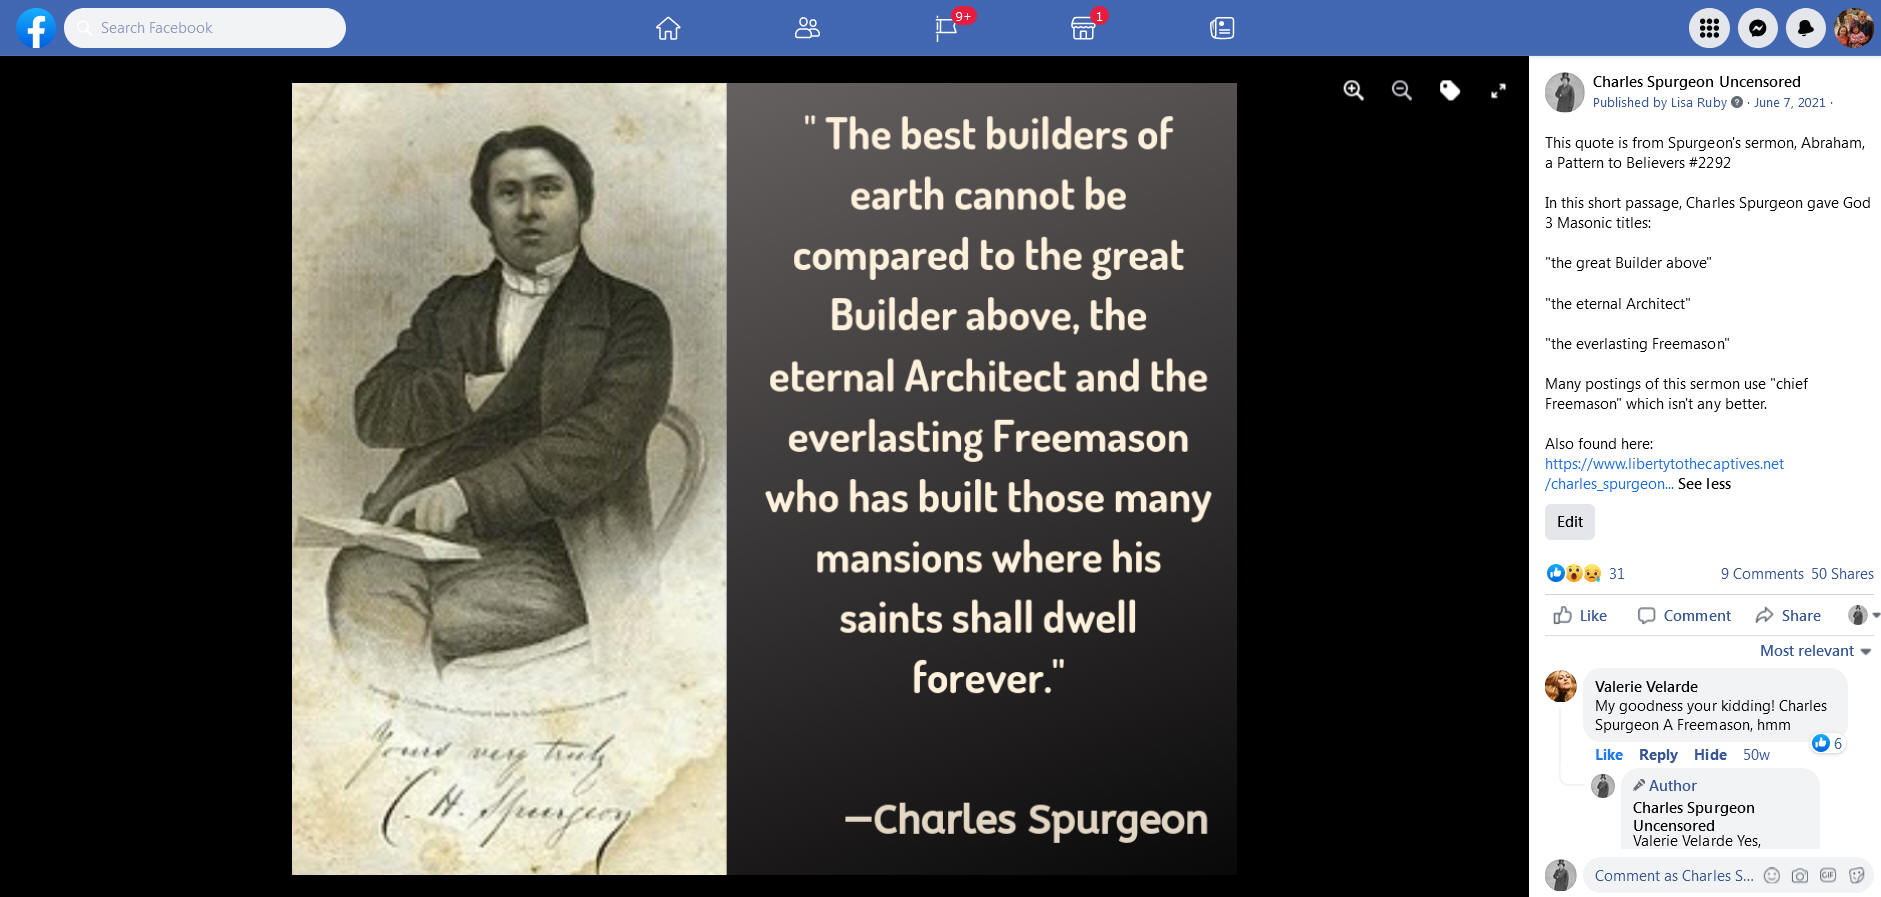 Charles Spurgeon gave God the Masonic titles; Everlasting Freemason, great Builder above, and the eternal Architect. 